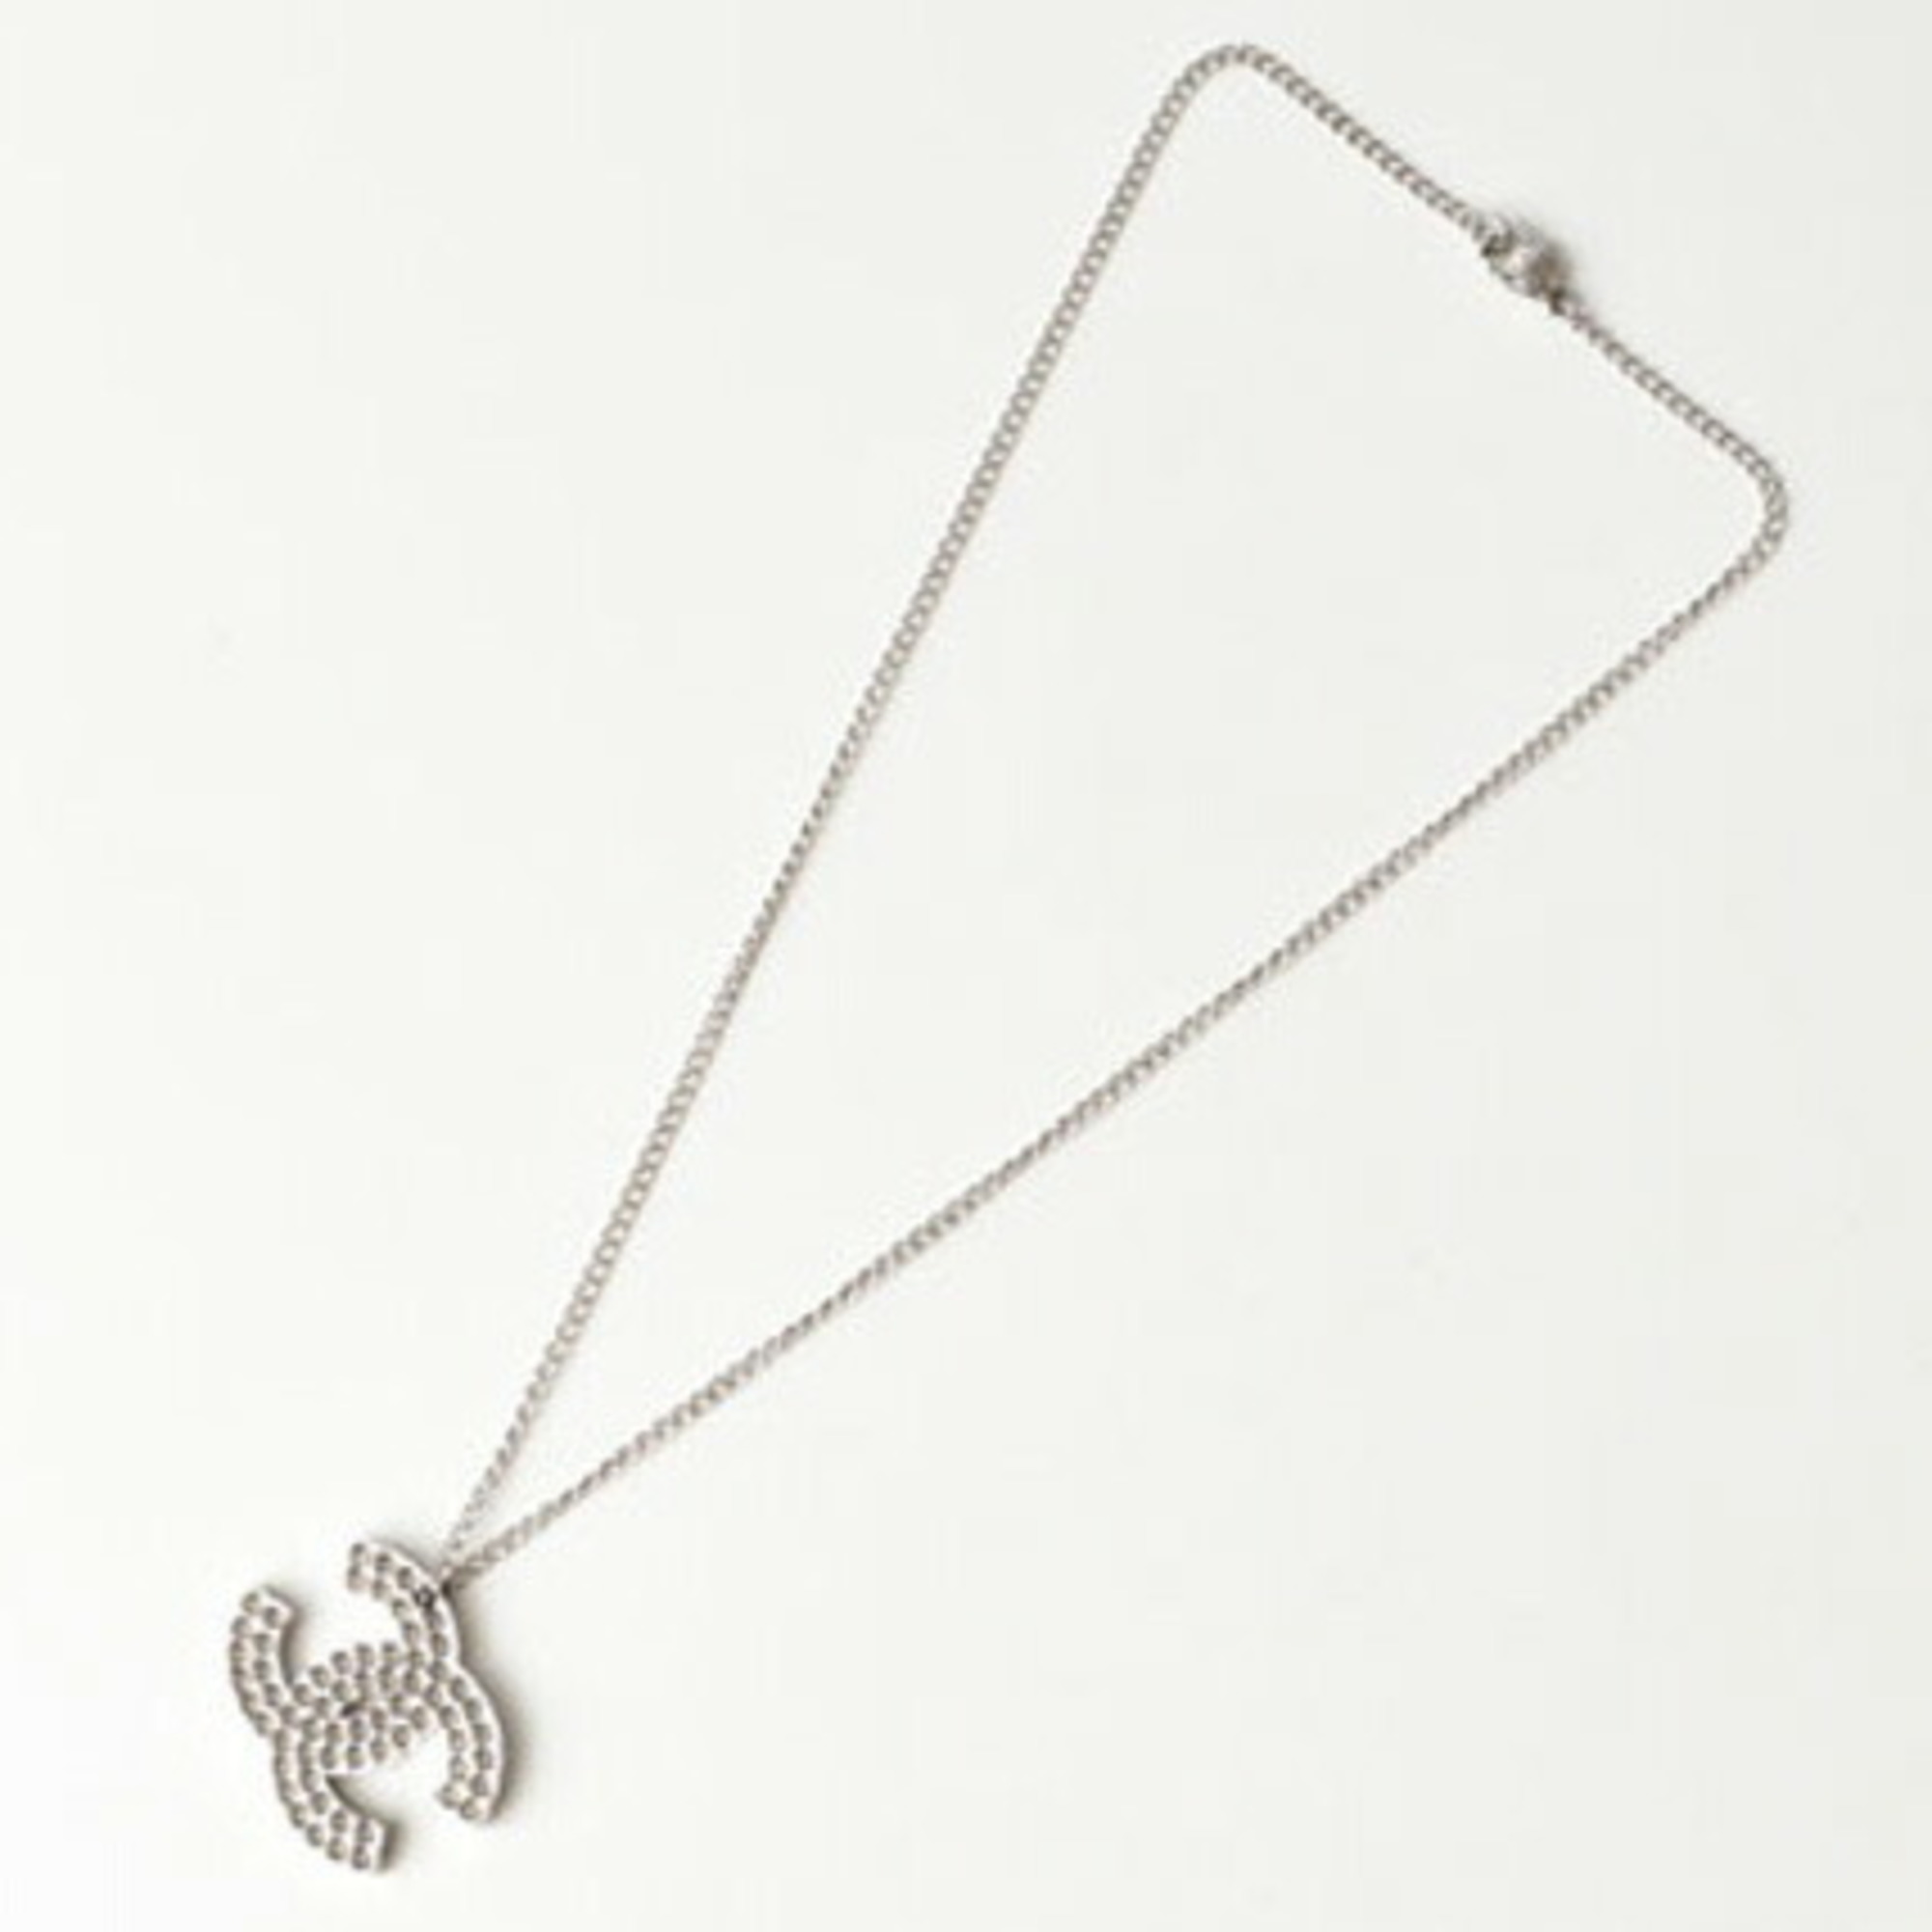 Chanel necklace pendant CHANEL here mark CC studs black silver